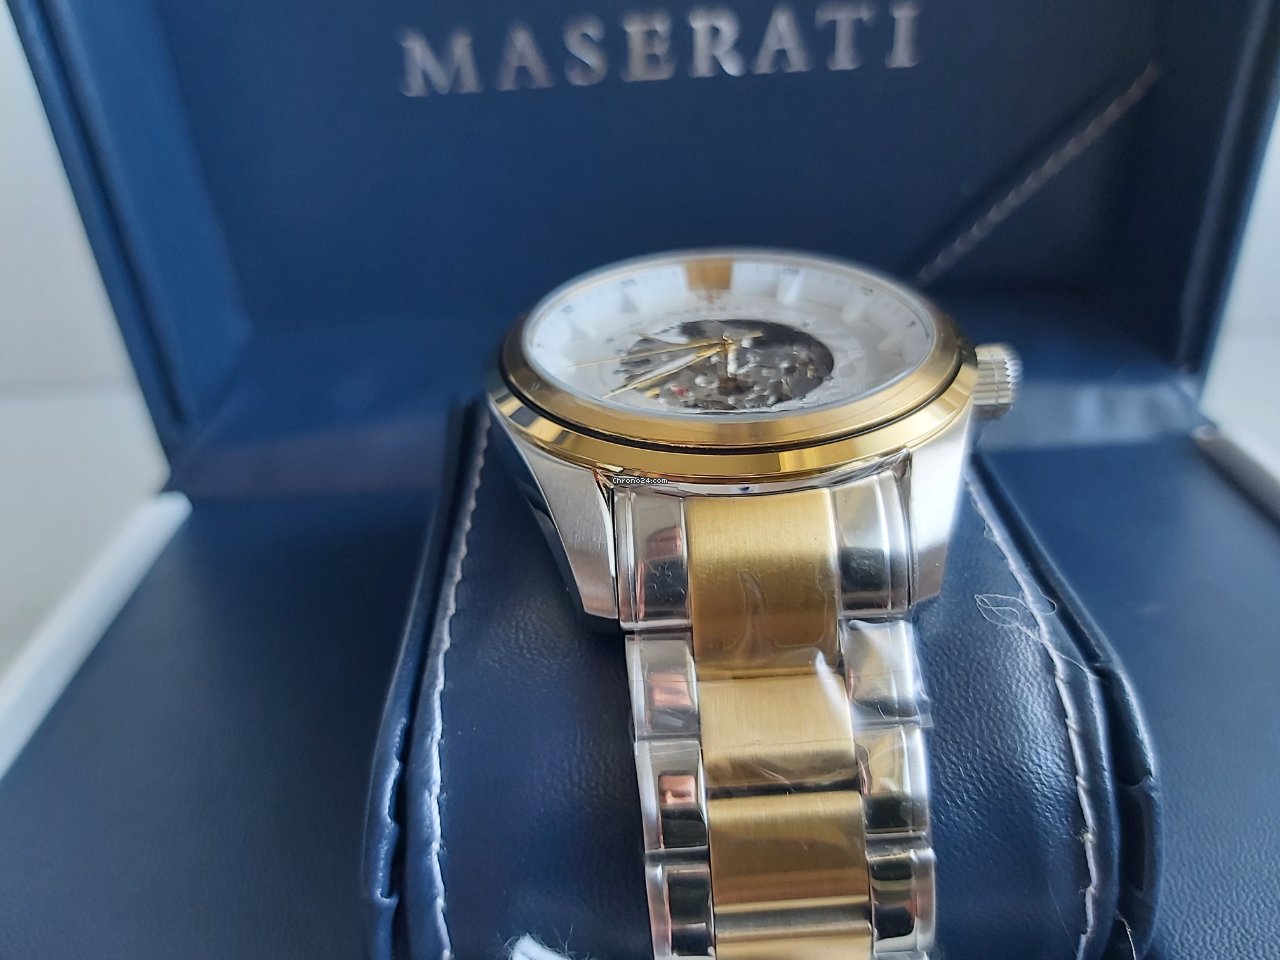 Maserati Traguardo Automatic White Skeleton Dial Stainless Steel Watch For Men - R8823112003